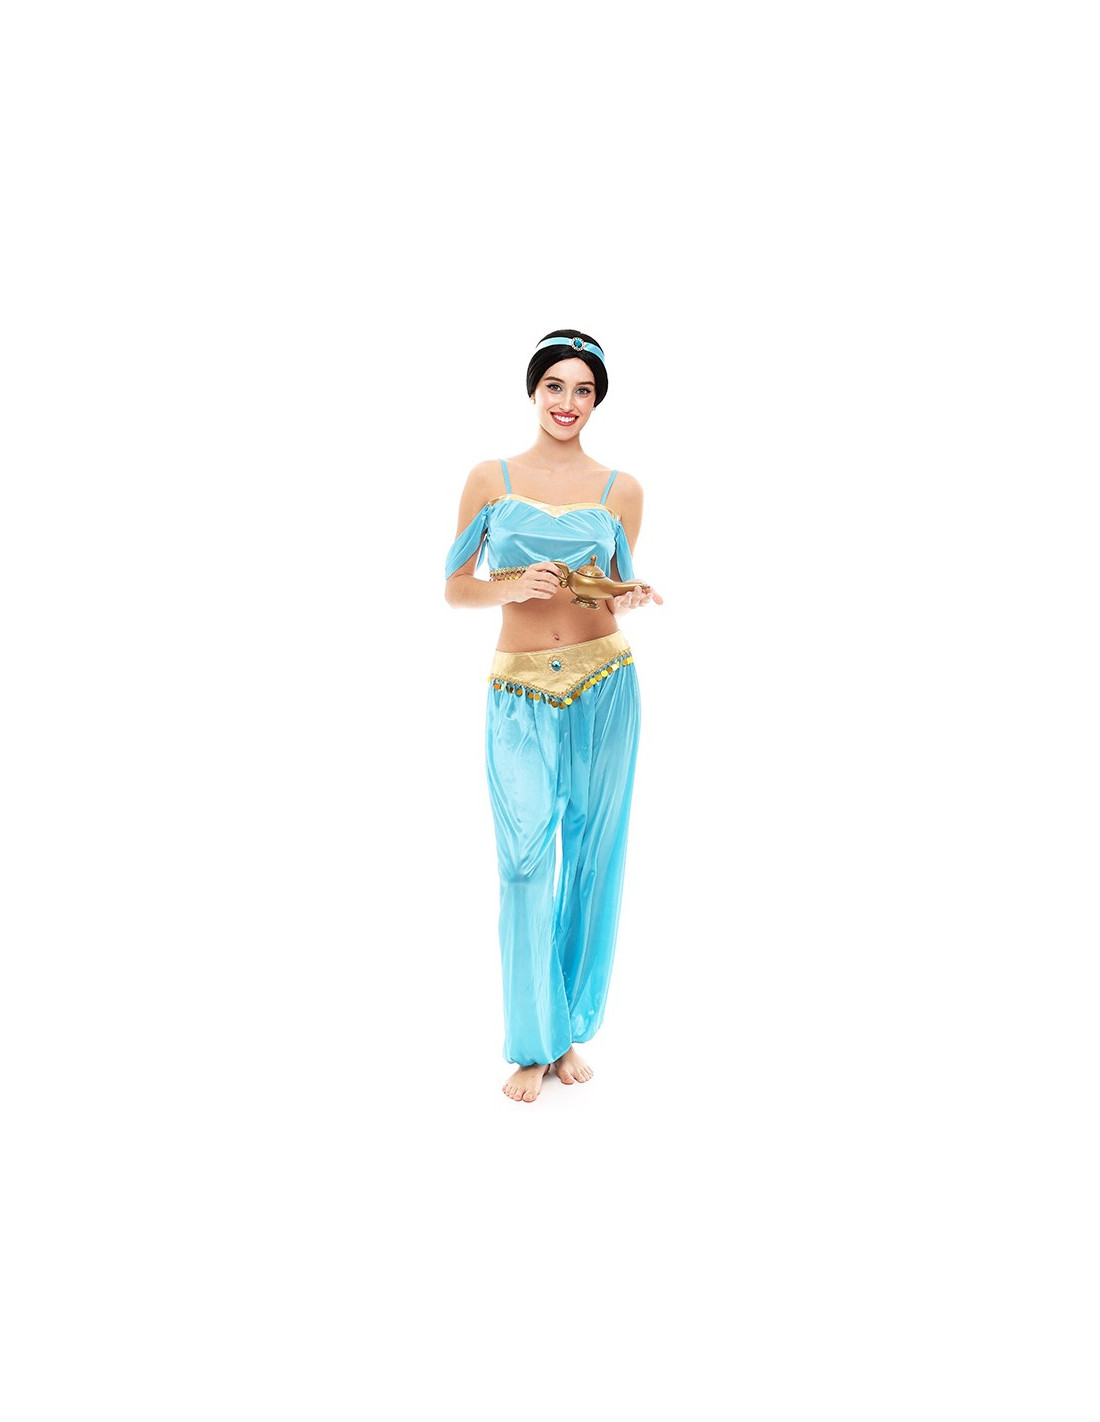 Disfraz de Jasmín, la princesa de Aladdin